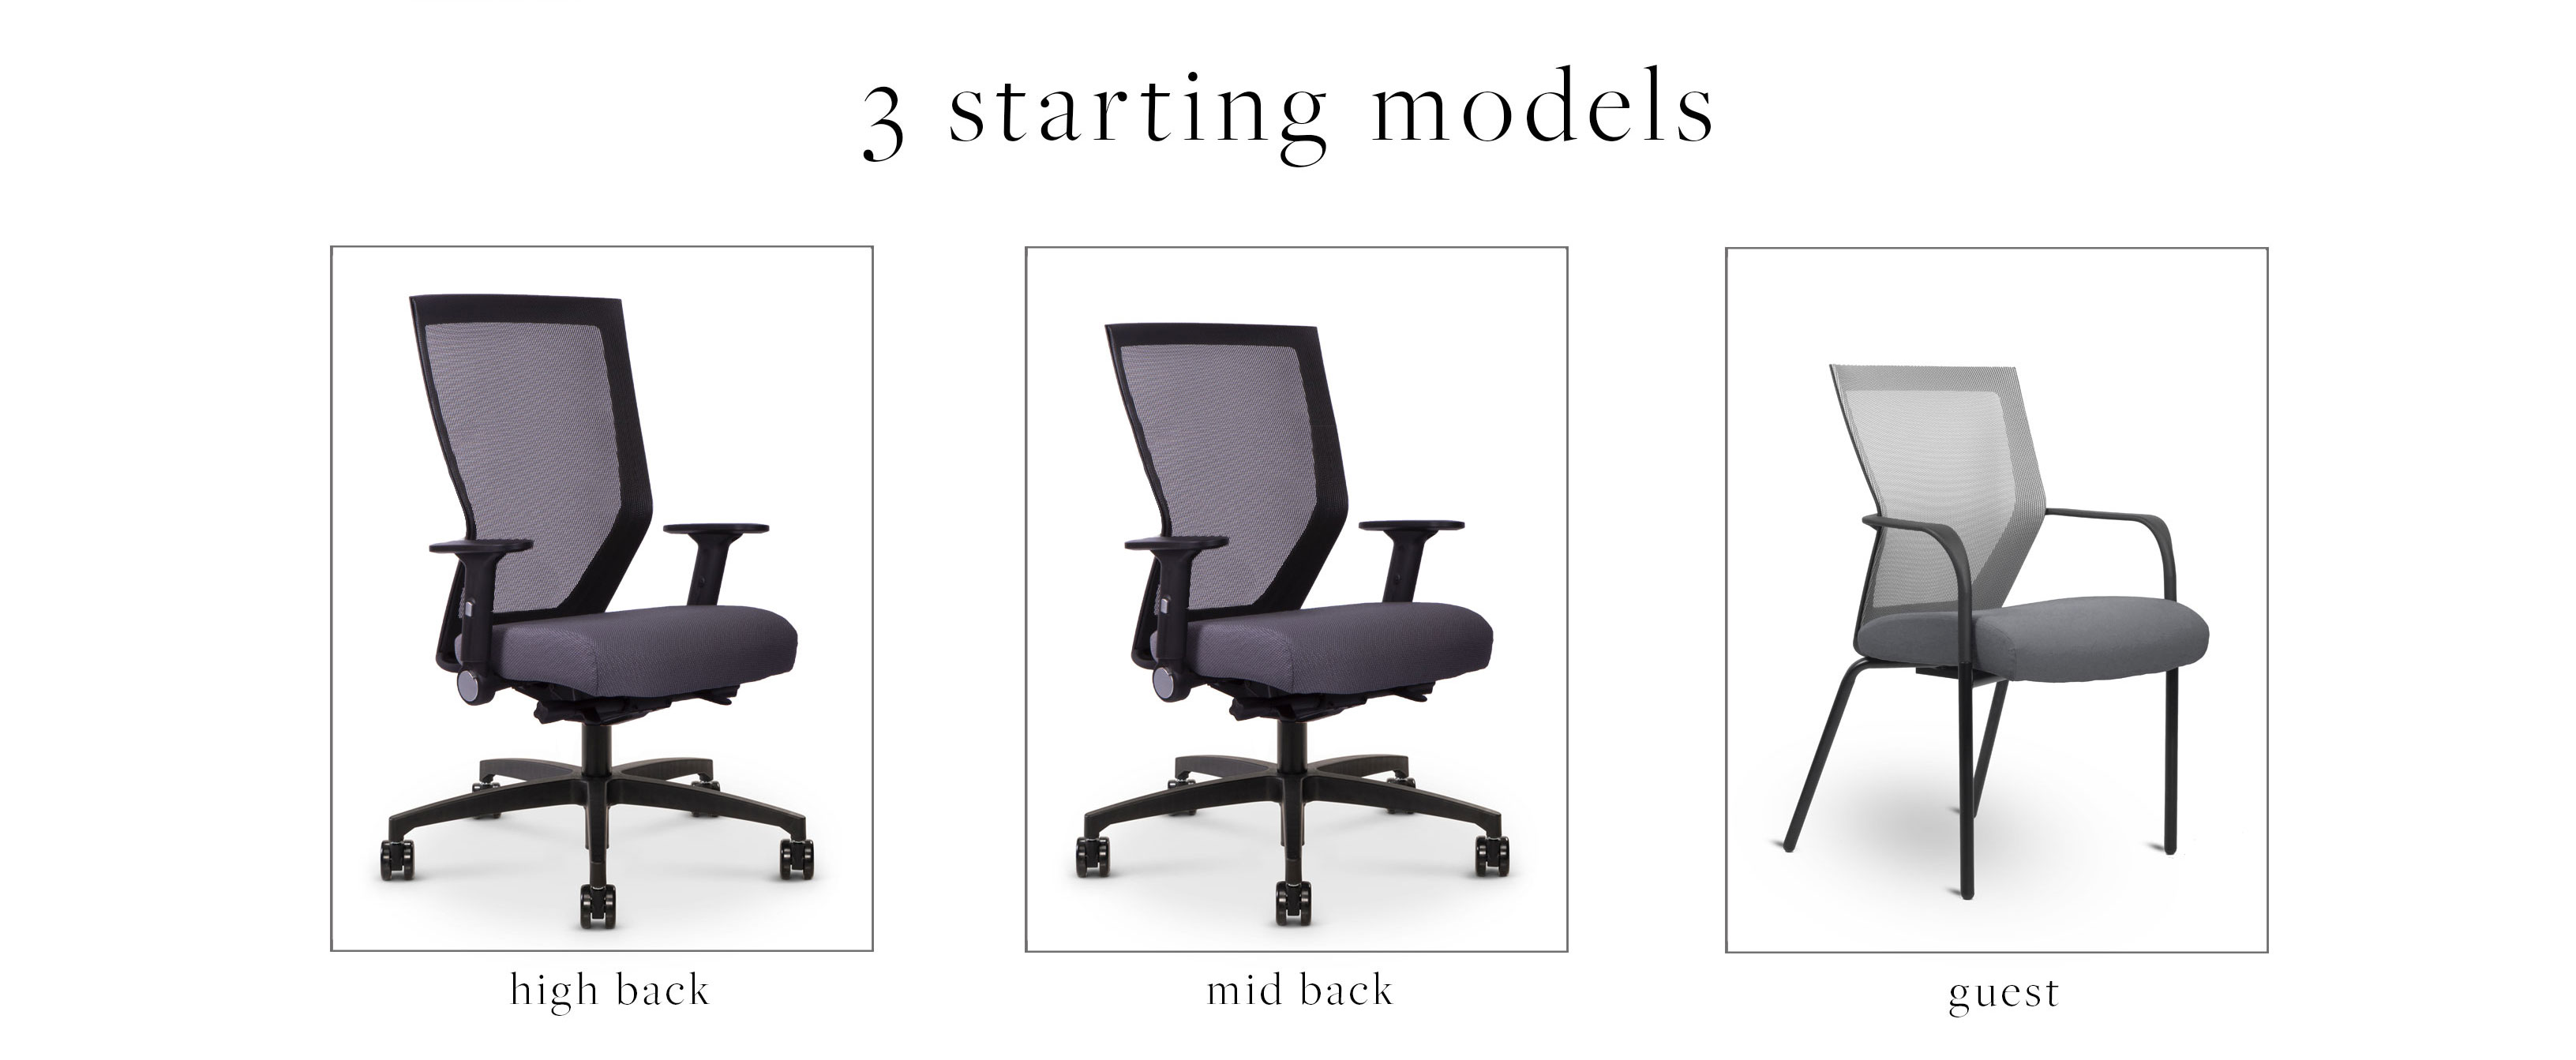 Run II ergonomic work chairs, stools & side/guest seating - Via Seating